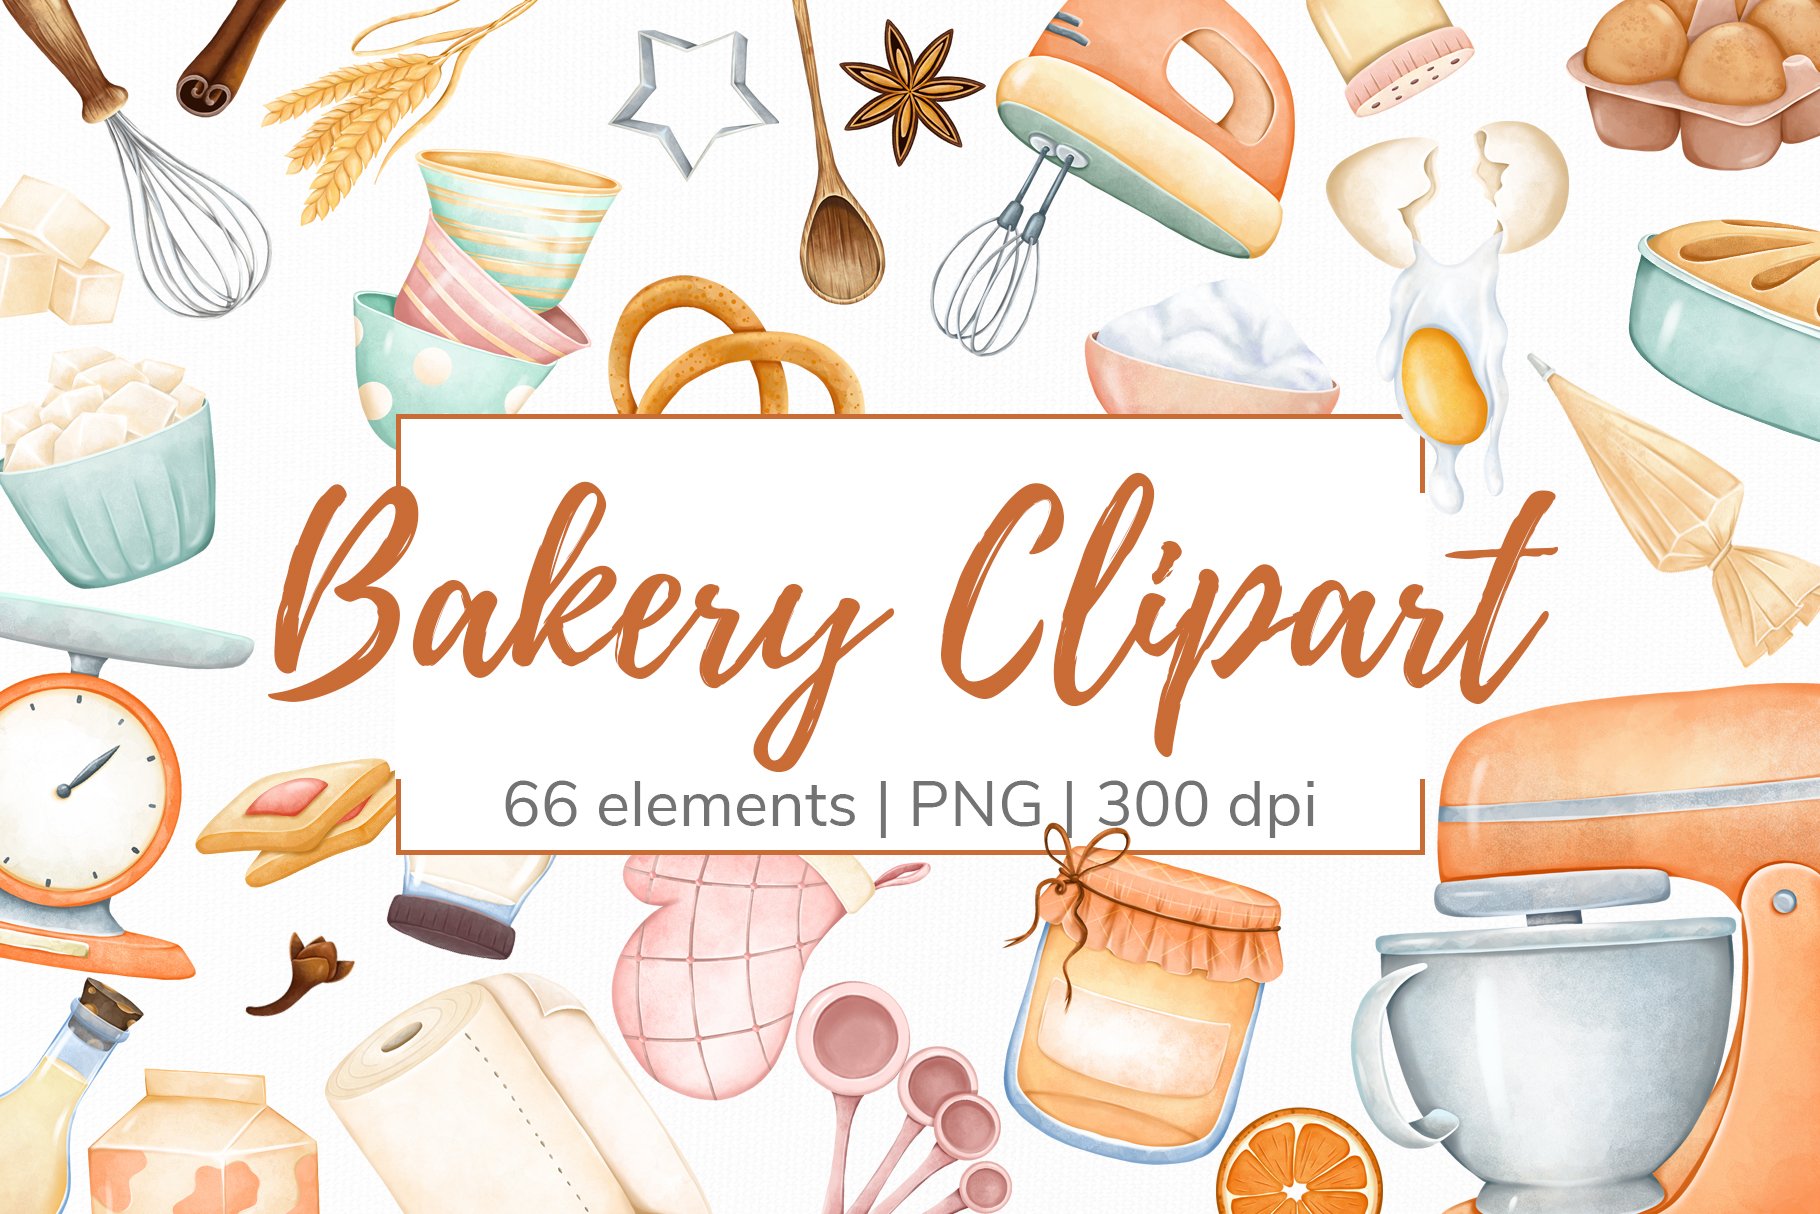 Cute baking digital clipart cover image.